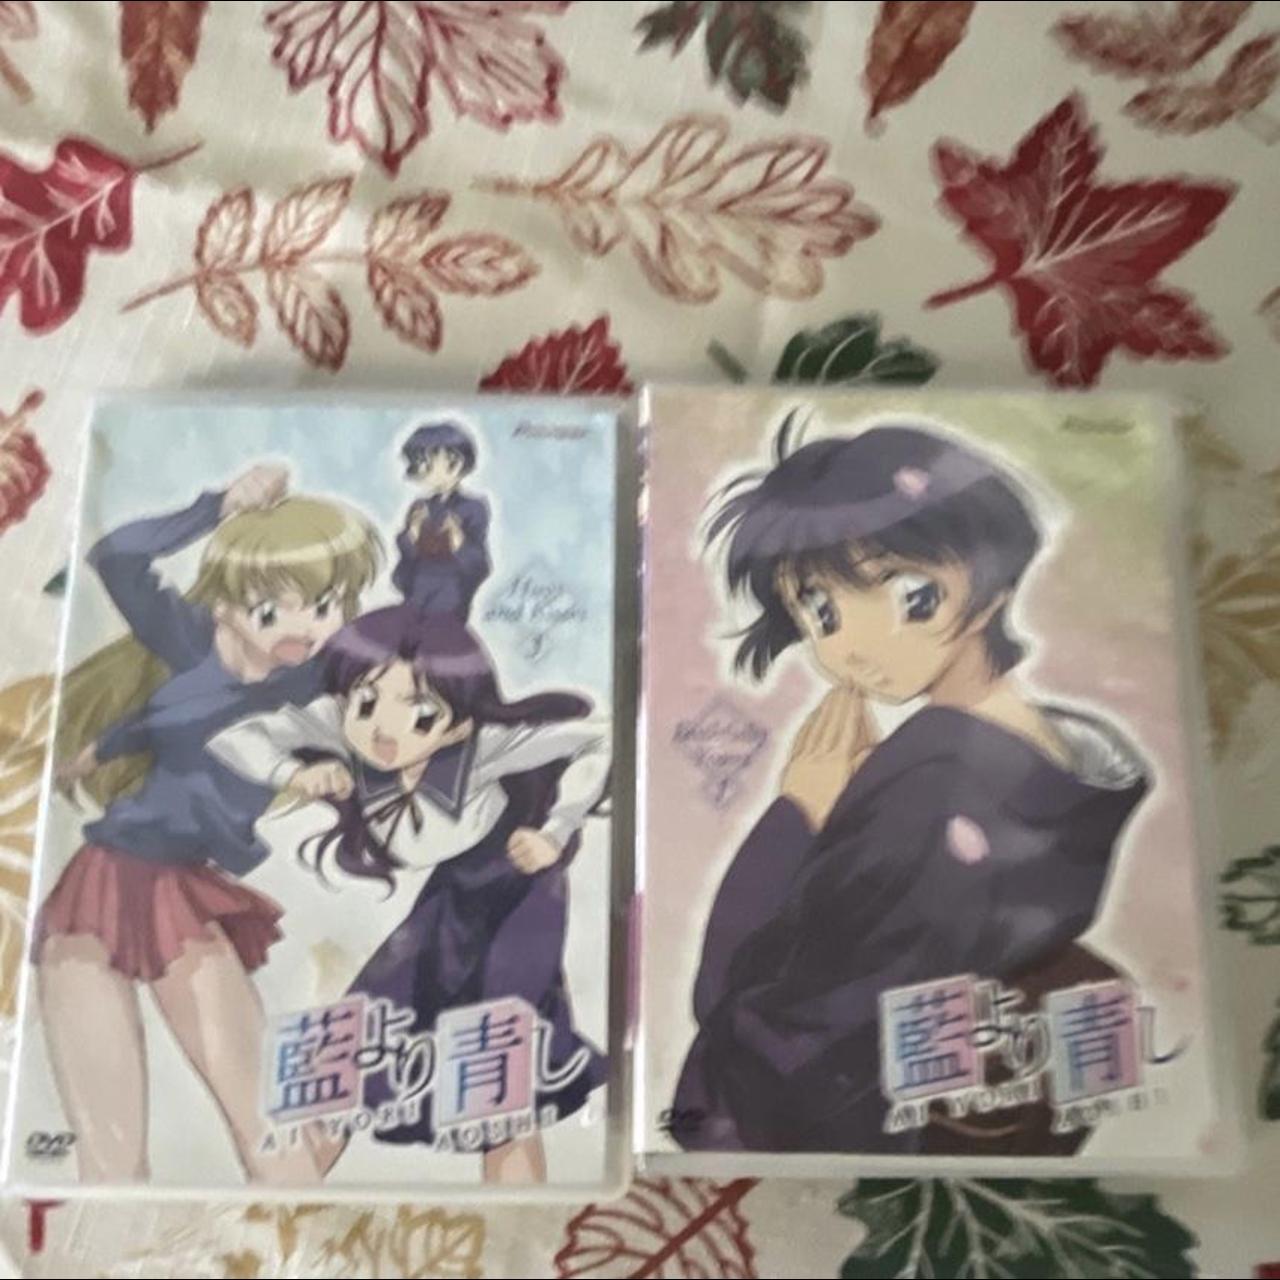 Ai Yori Aoshi Anime Poster Wall Decor